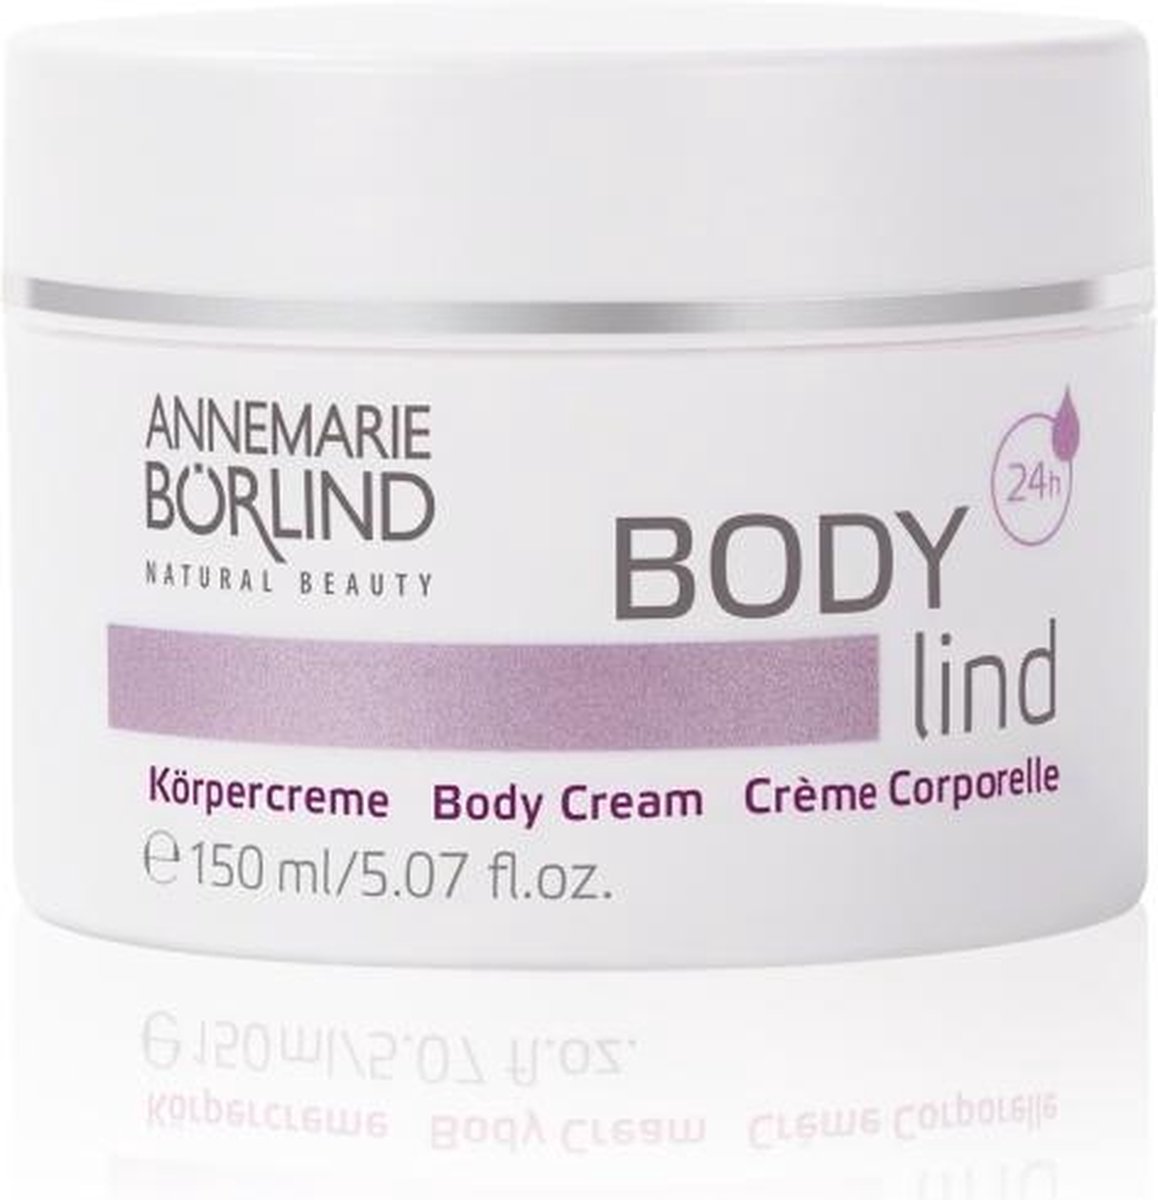 Annemarie Börlind BODY lind bodycrème 150 ml | bol.com